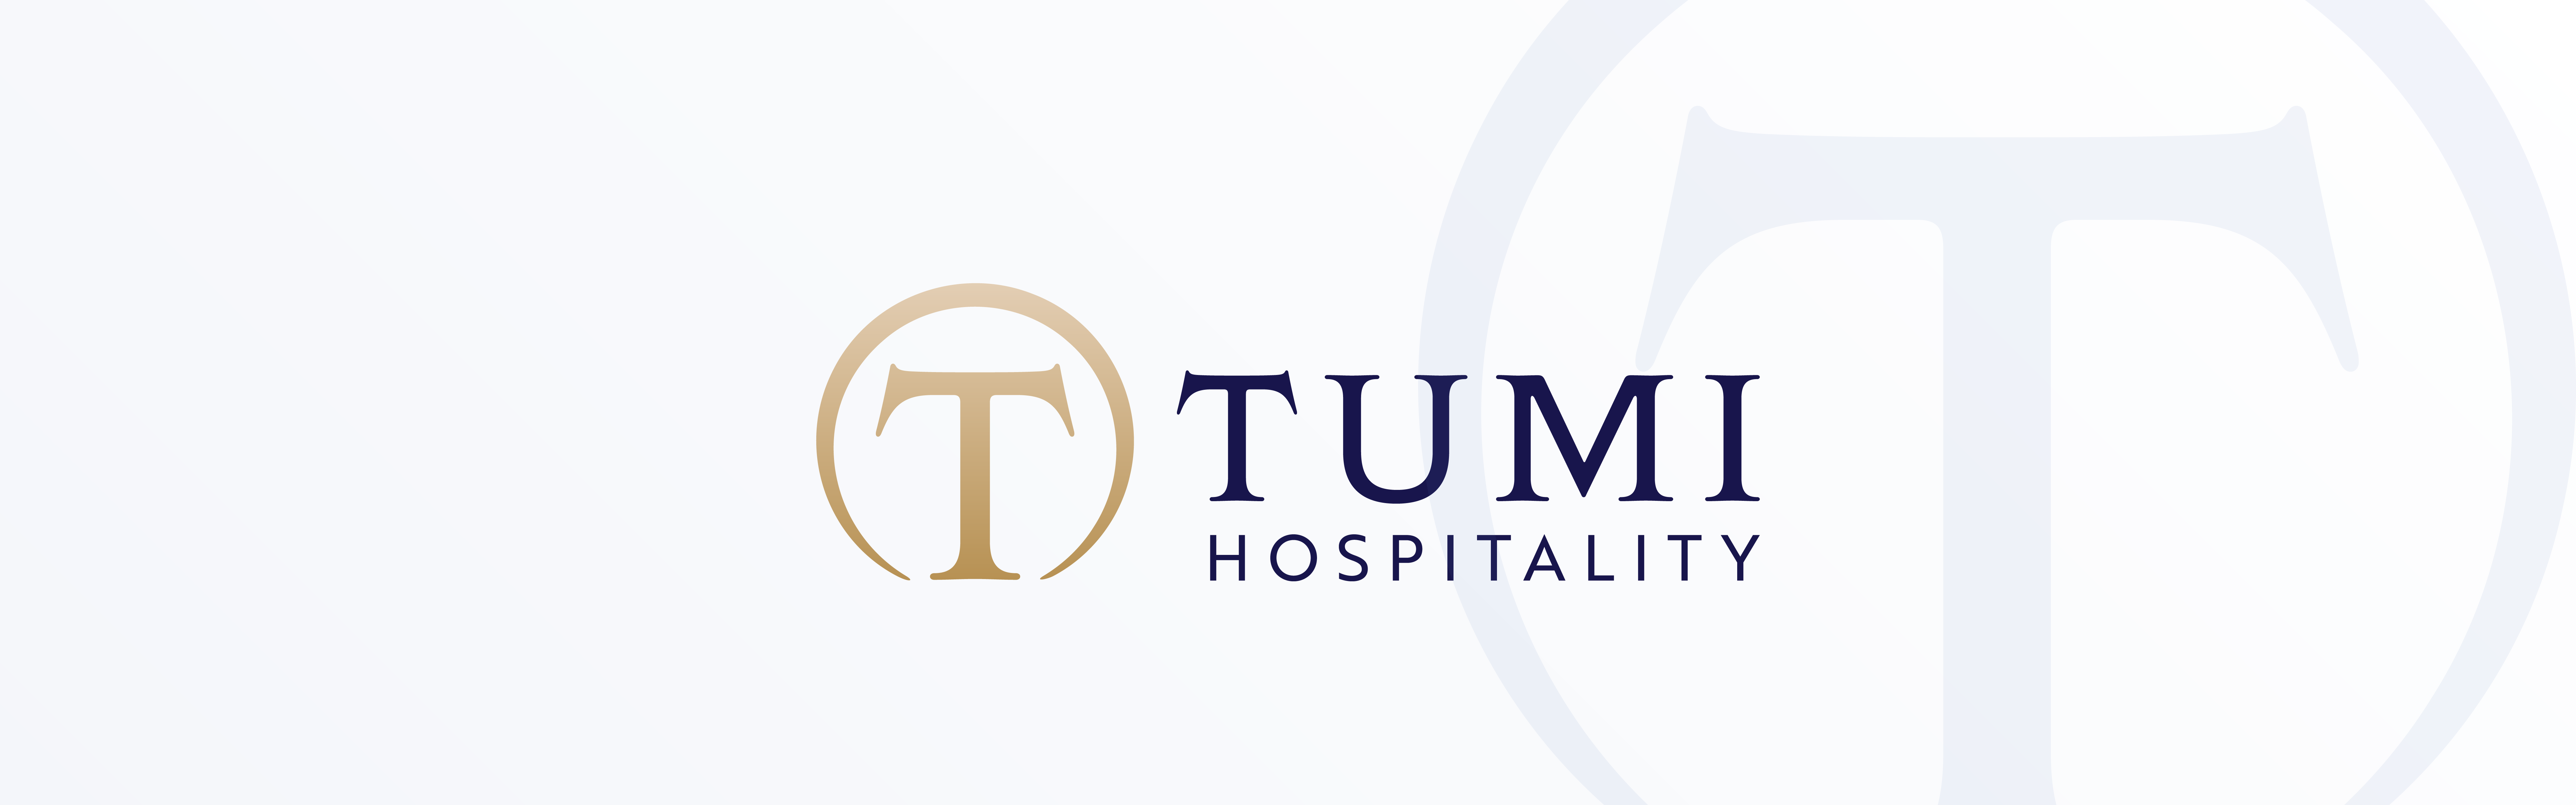 Tumi Hospitality logo design